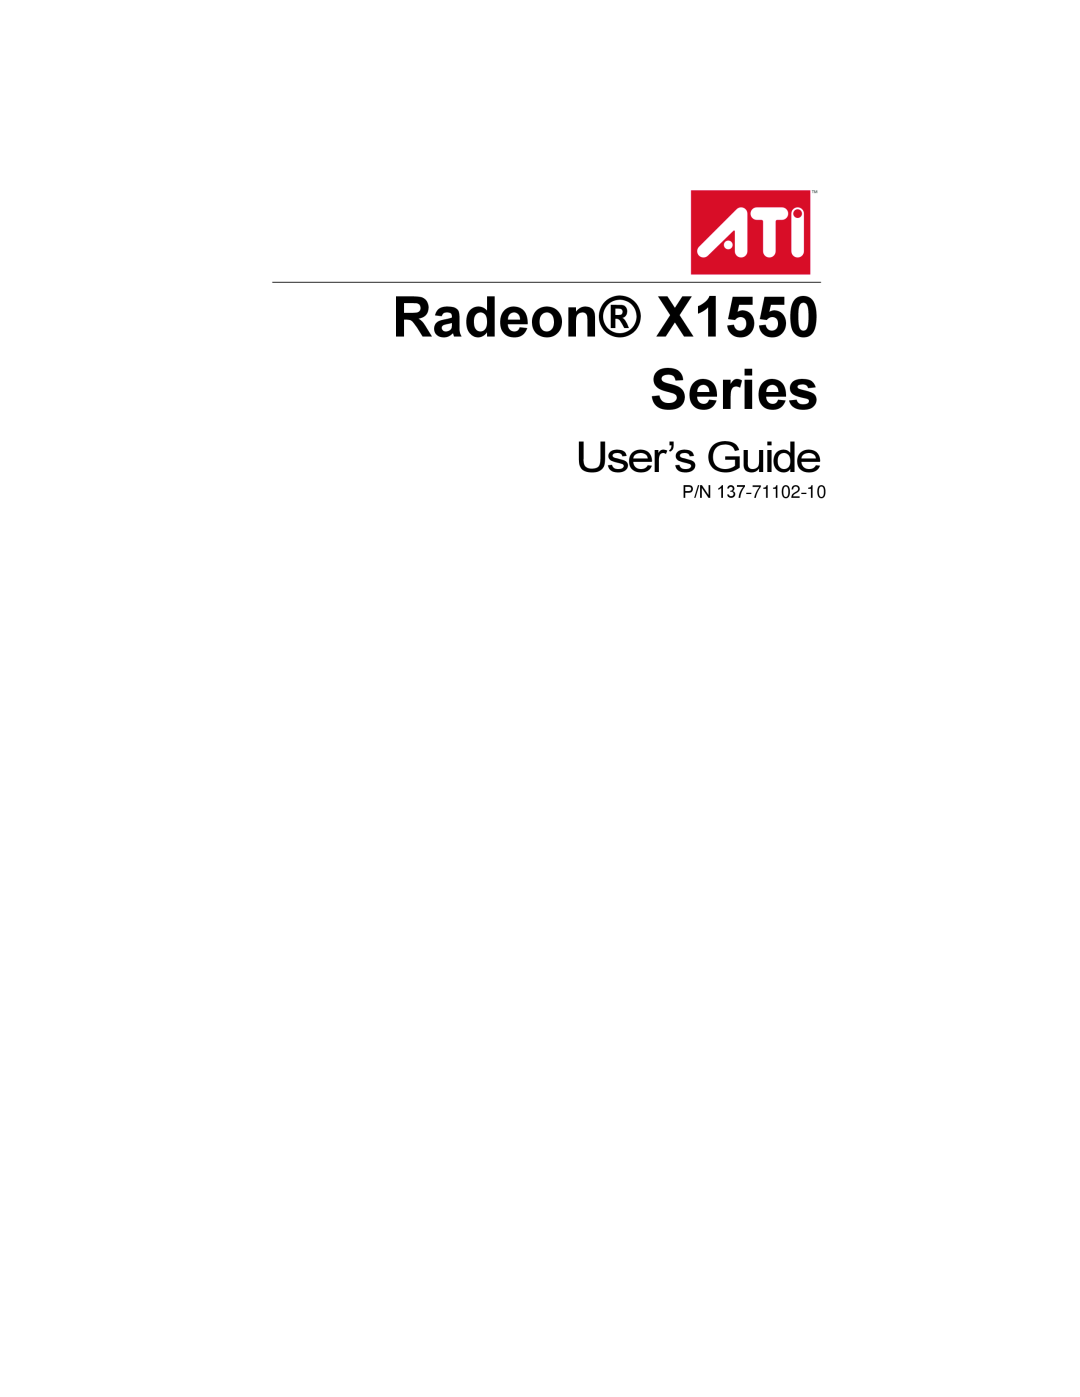 ATI Technologies X1550 SERIES manual Radeon X1550 Series, User’s Guide 